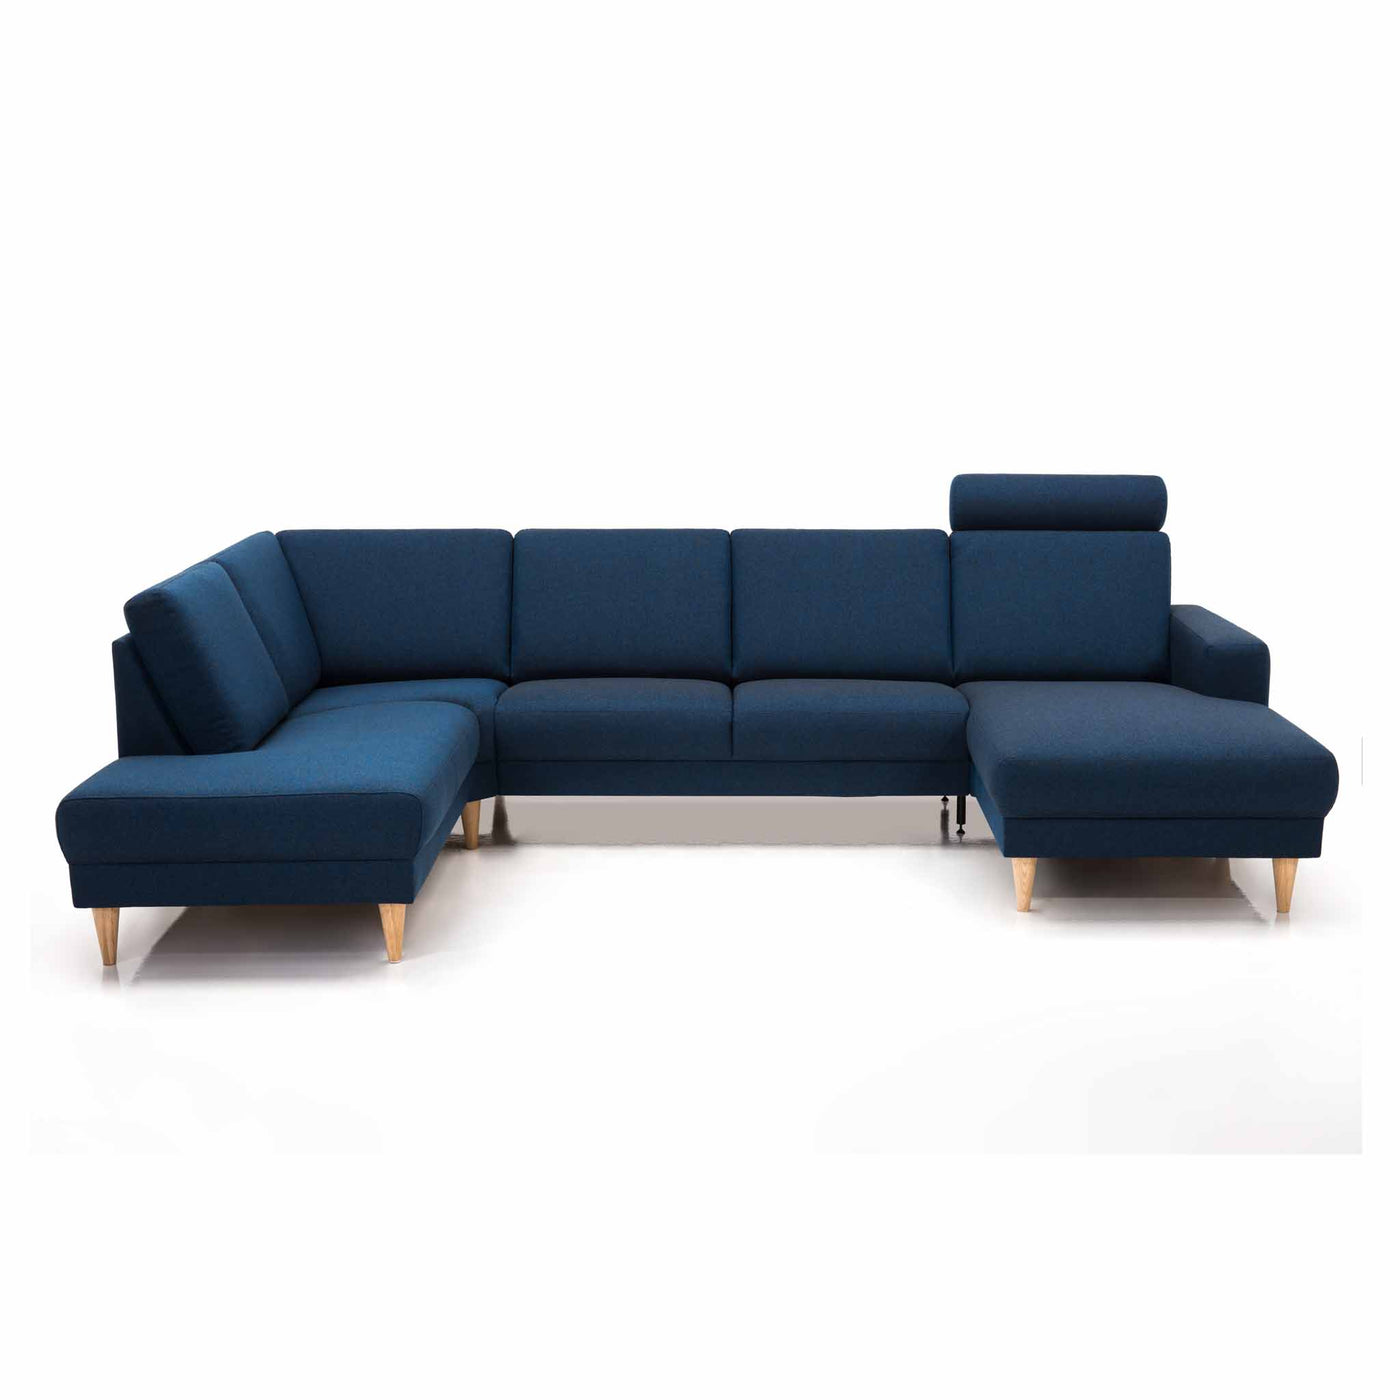 City U-sofa i blåt stof fra Hjort Knudsen